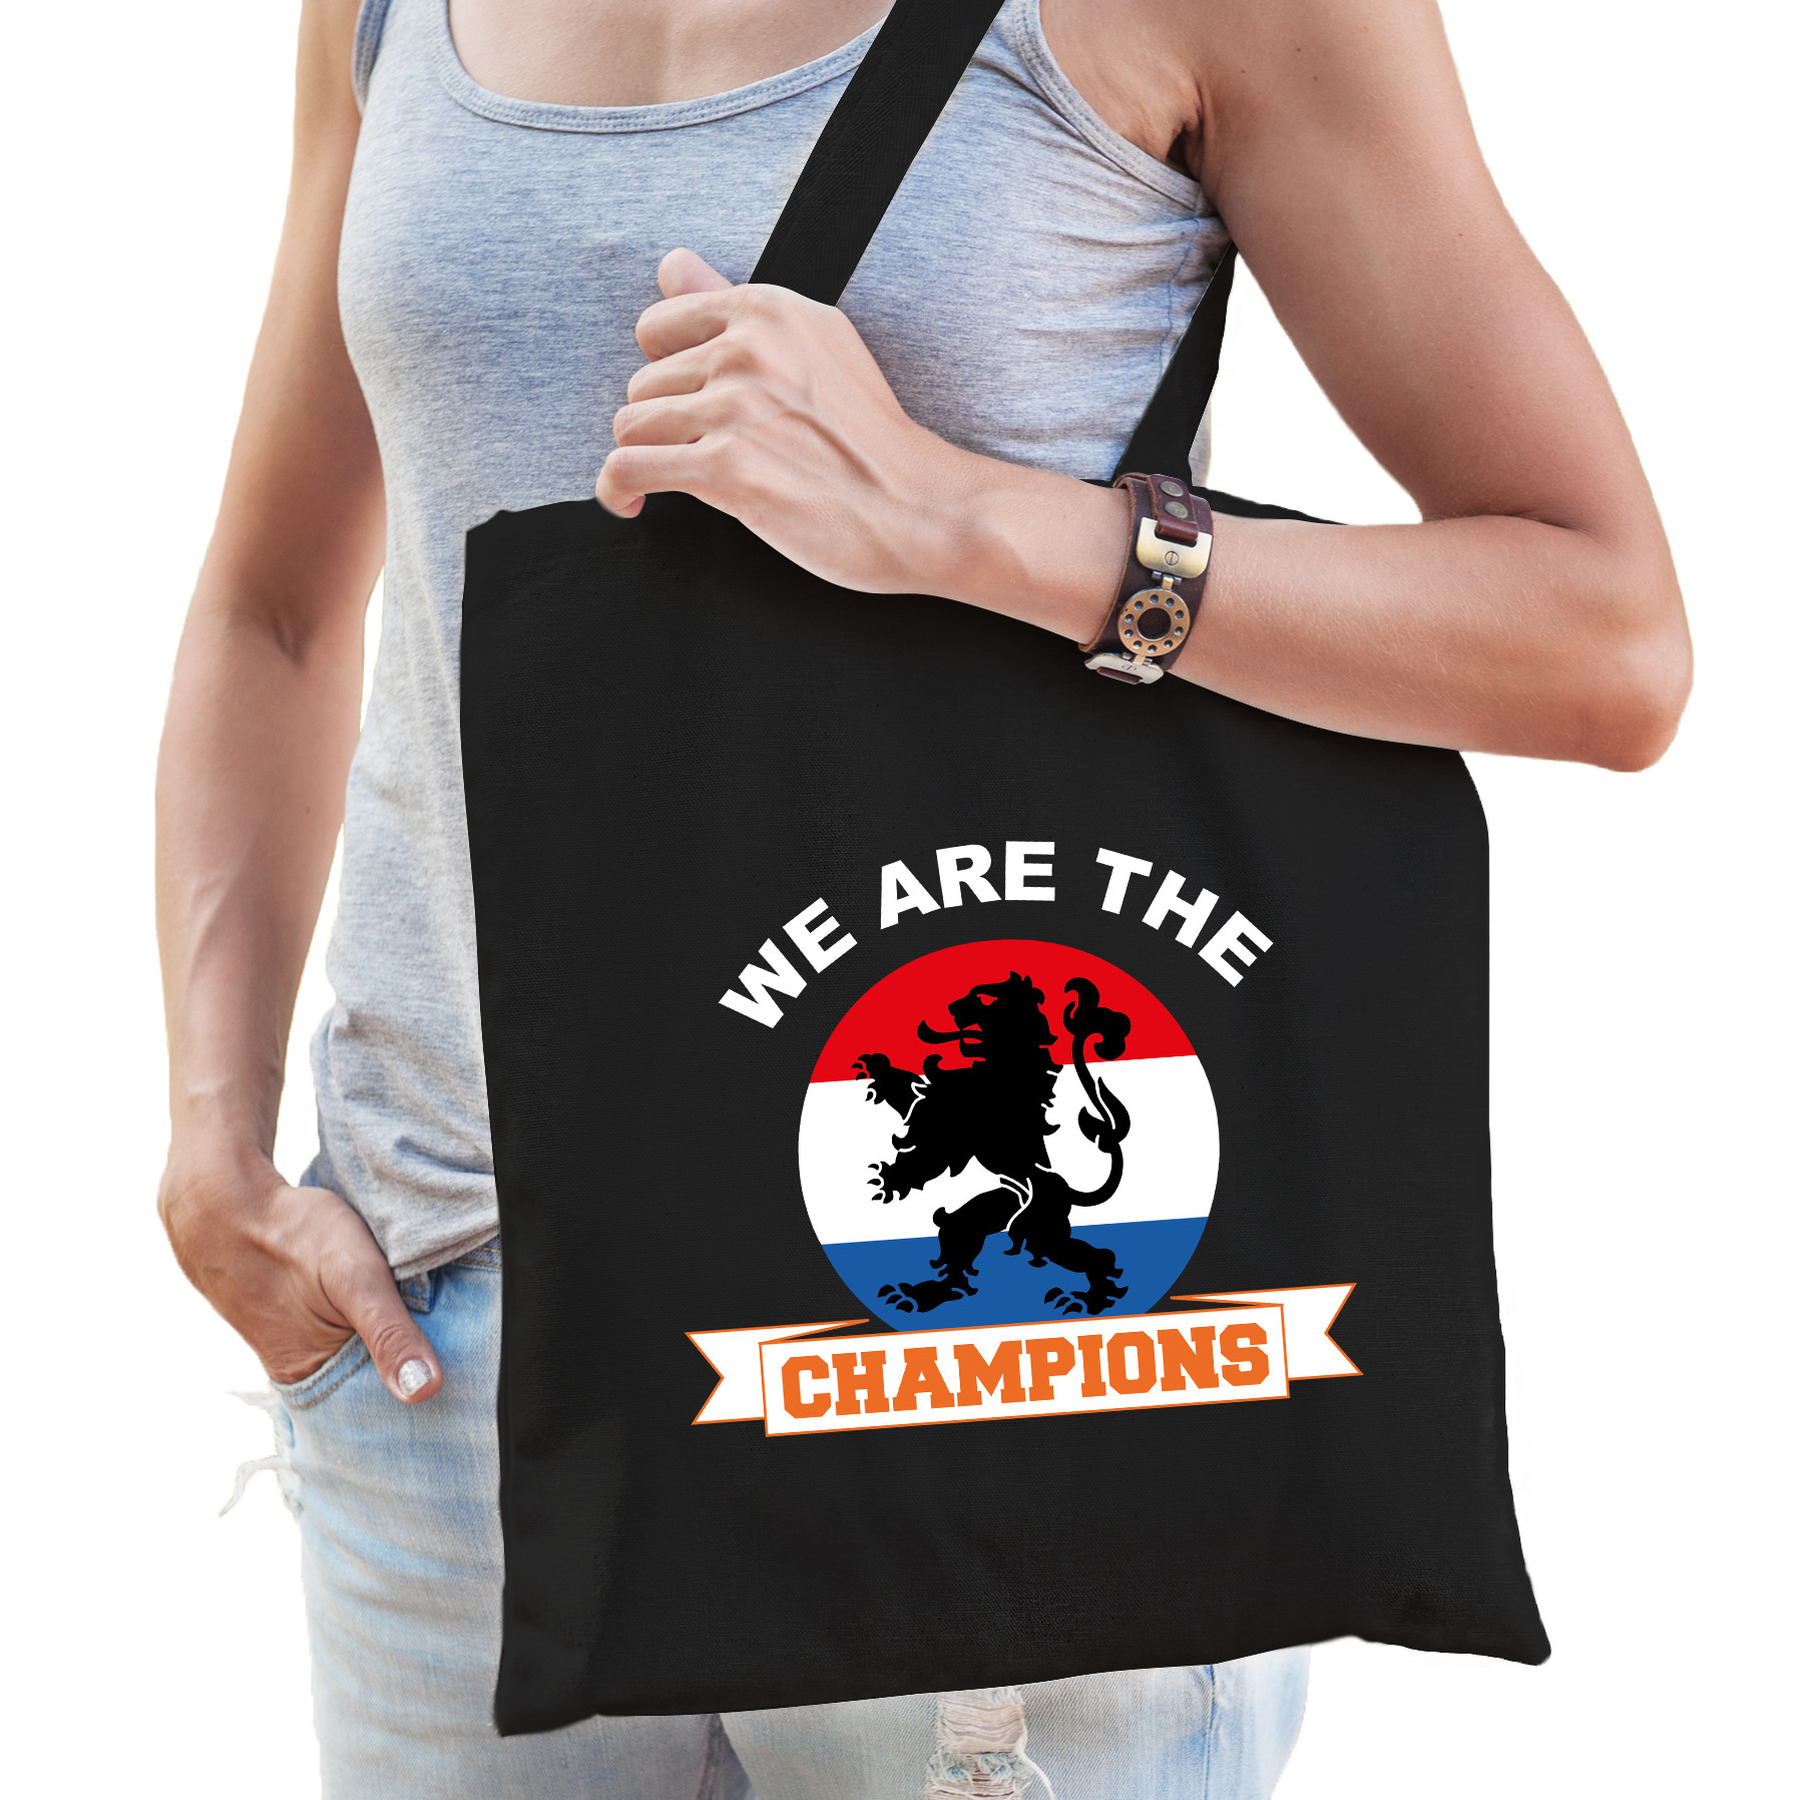 We are the champions oranje supporter tas zwart voor dames en heren EK- WK voetbal-Koningsdag